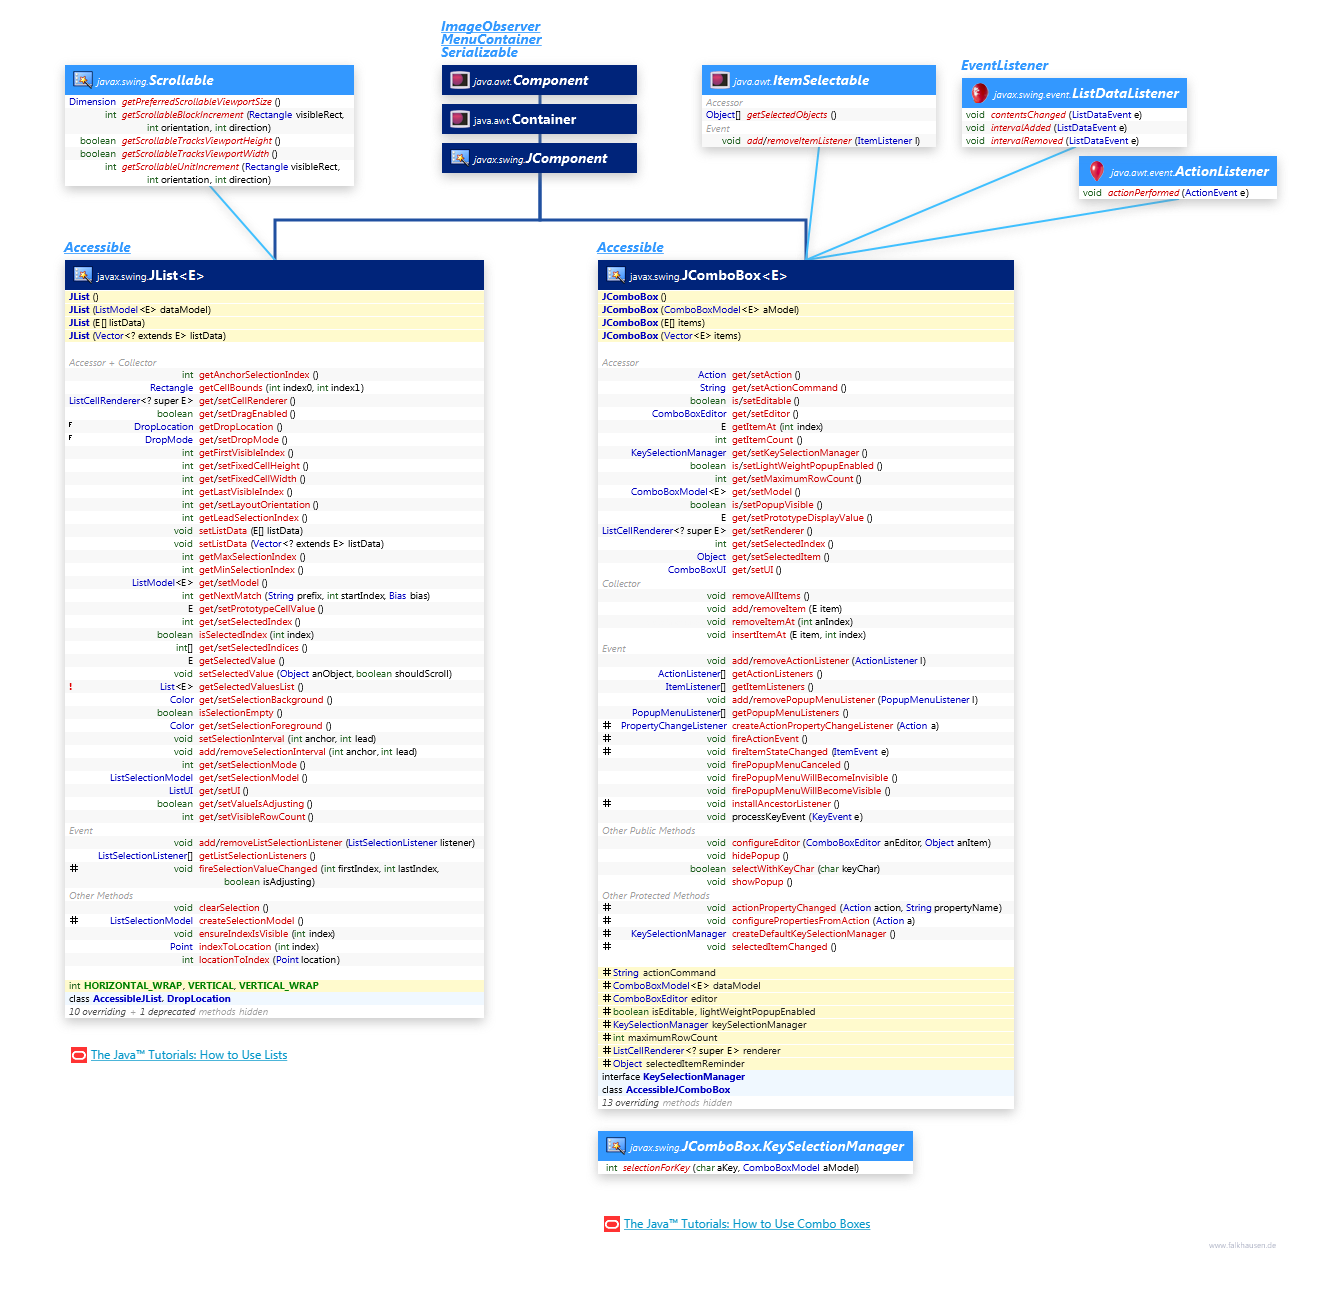 JList, JComboBox class diagram and api documentation for Java 7